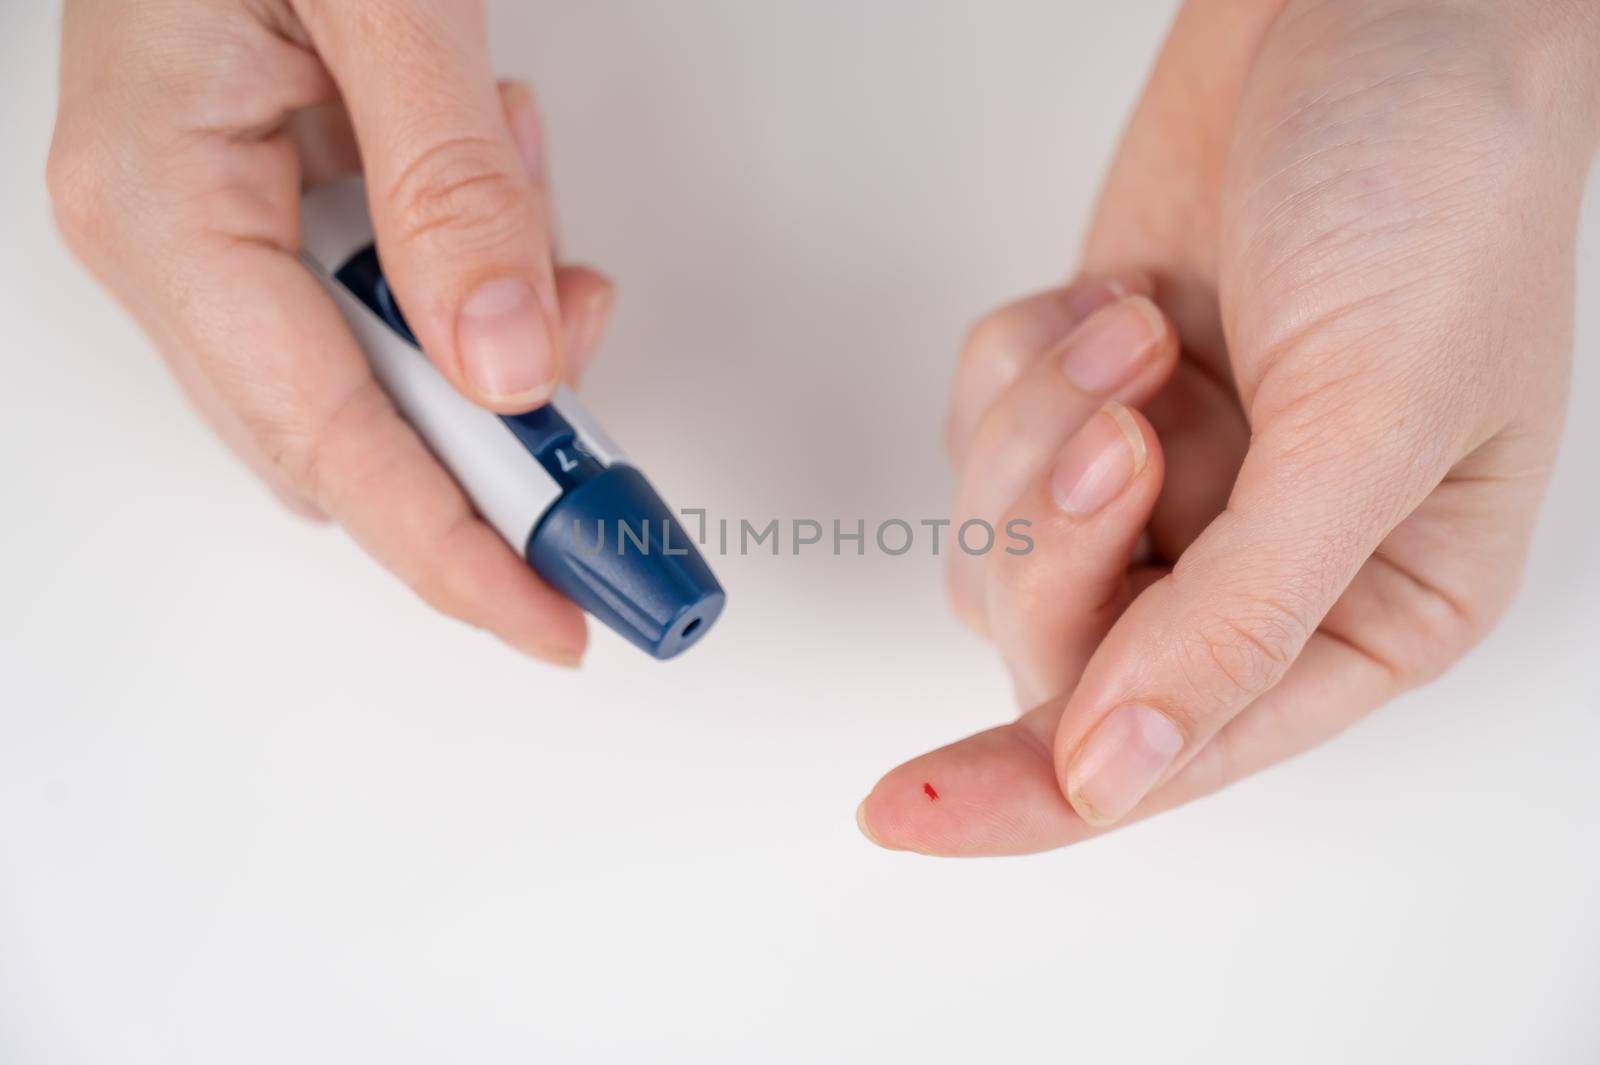 Caucasian woman doing a glucose test using a pen lancet